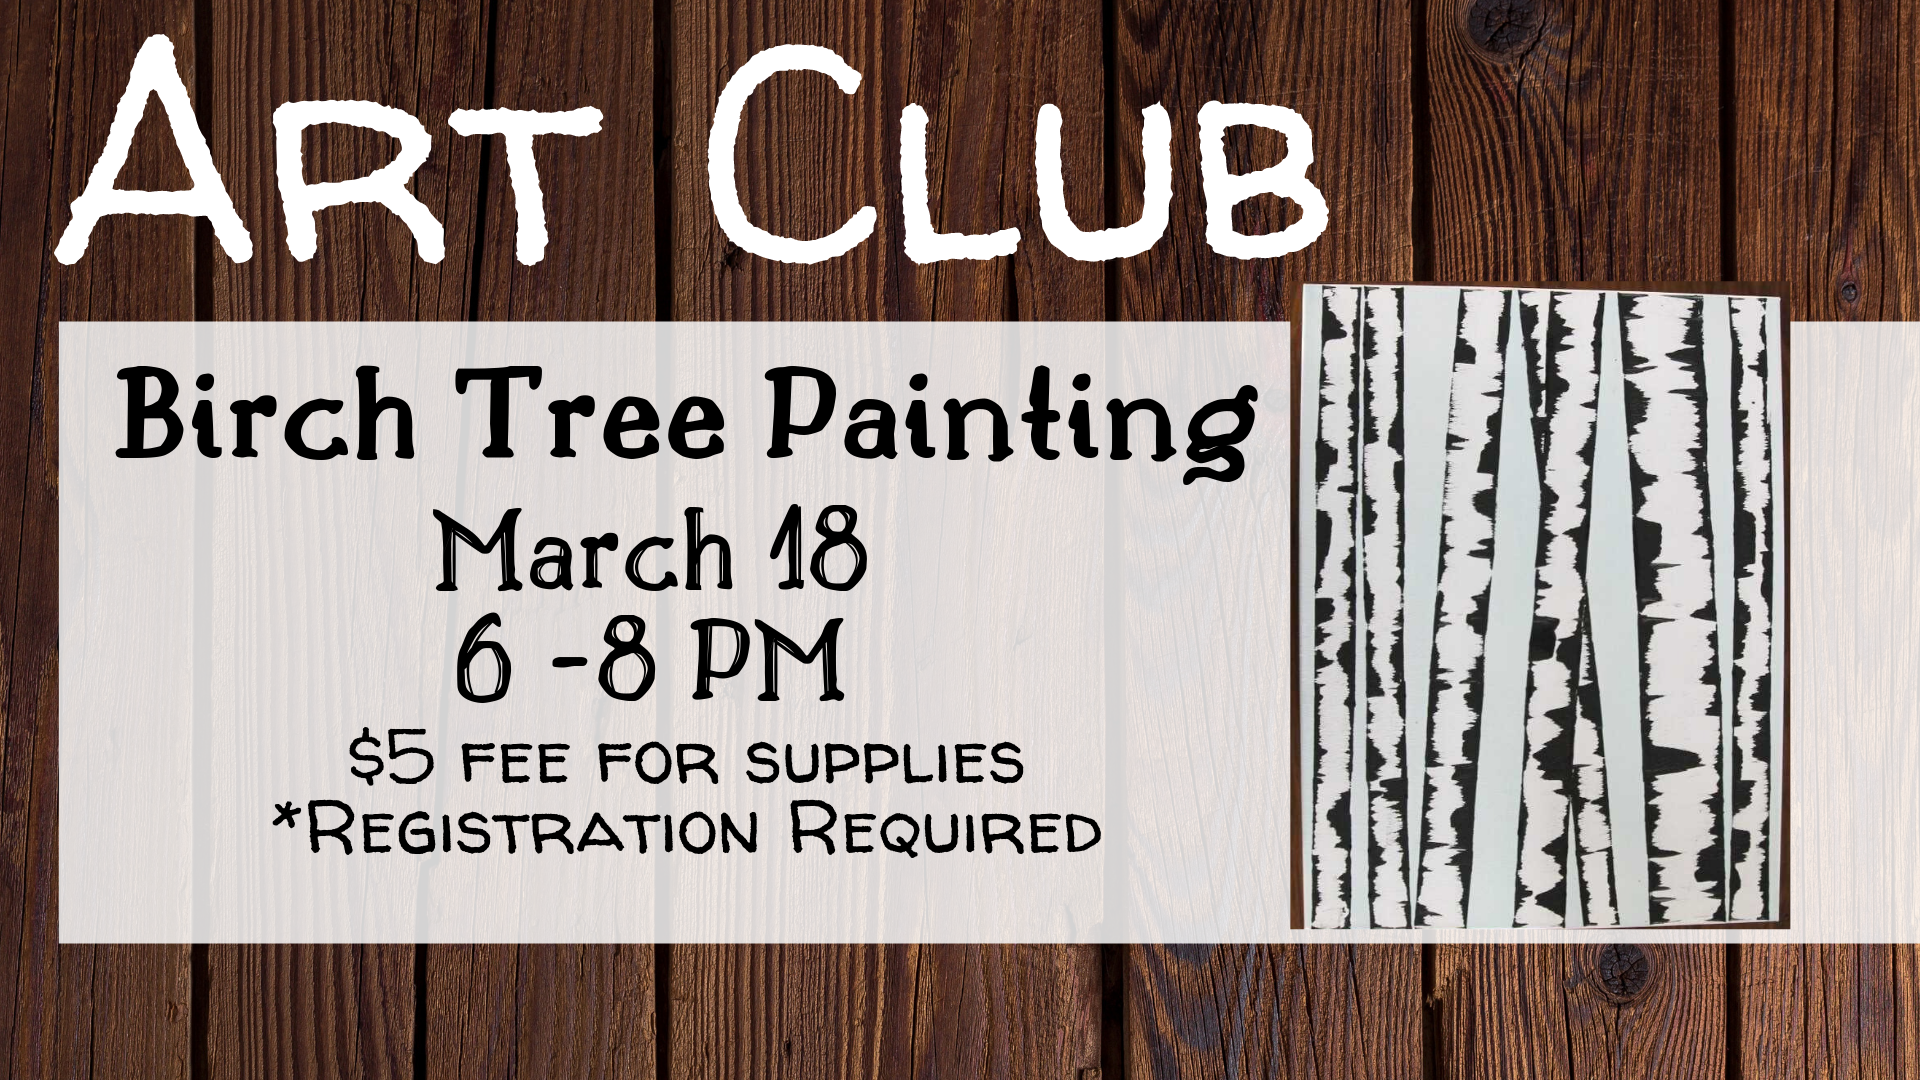 Art Club - Birch Tree Painting